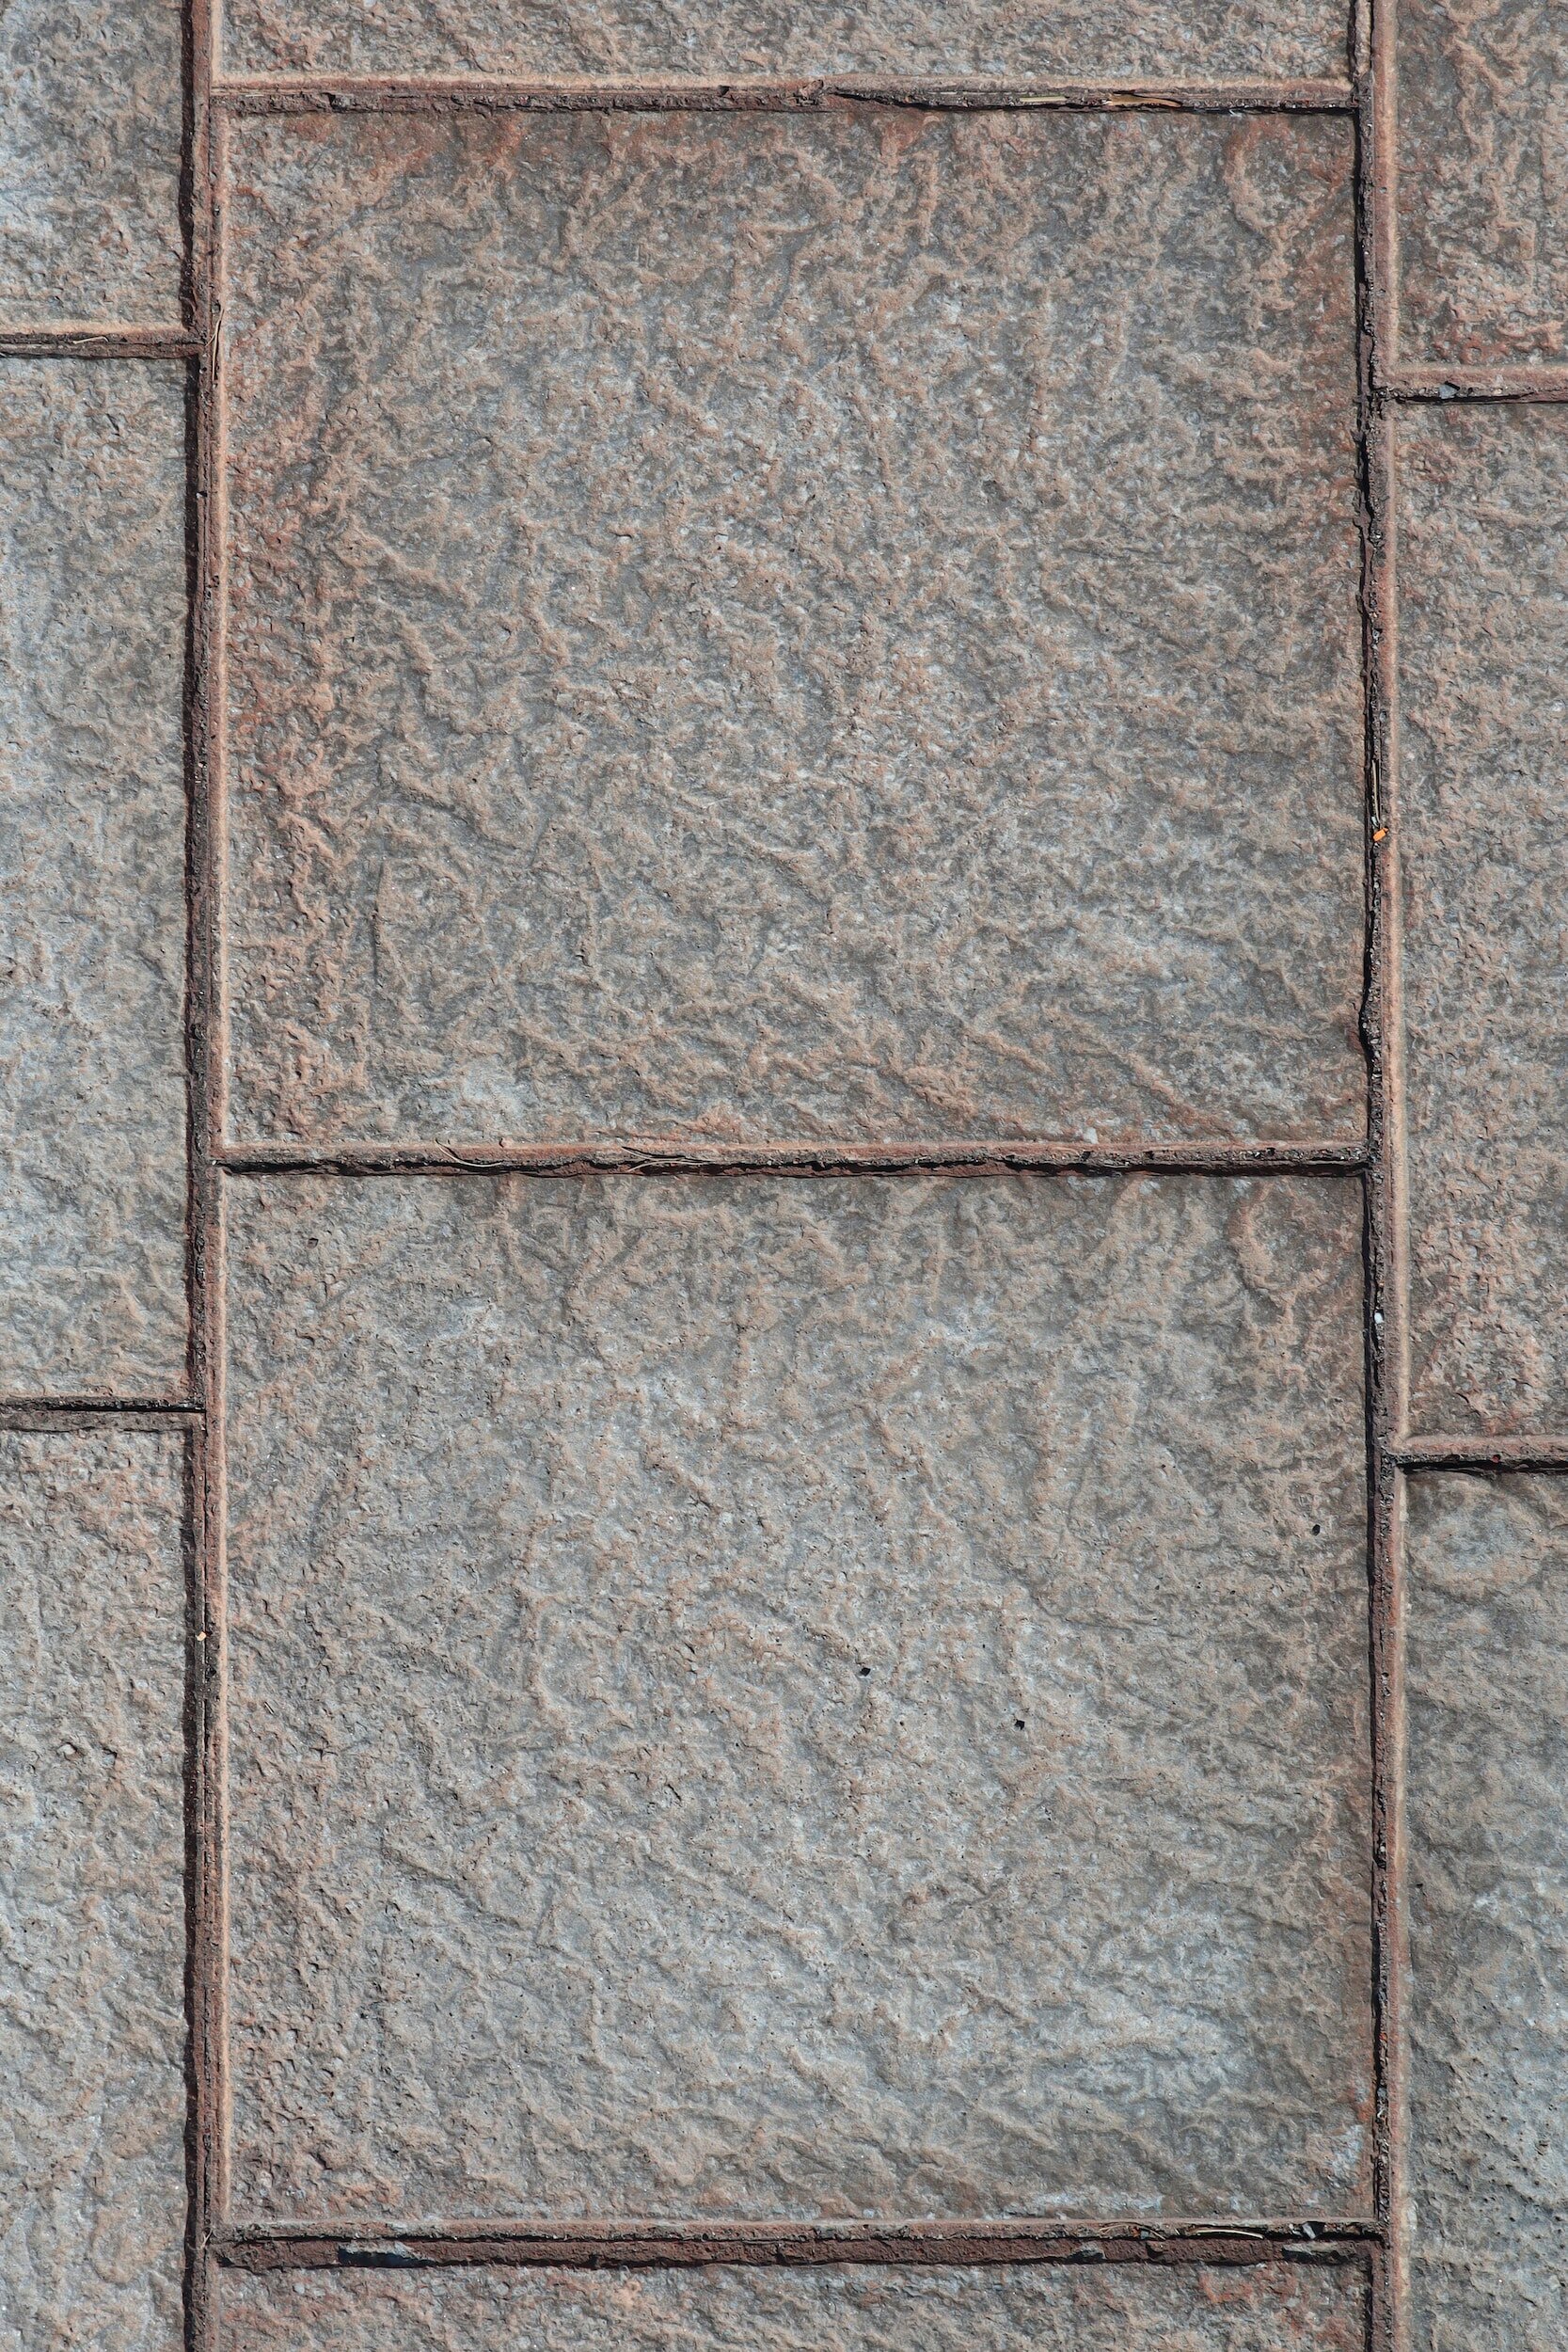 Example of plain stone tile flooring